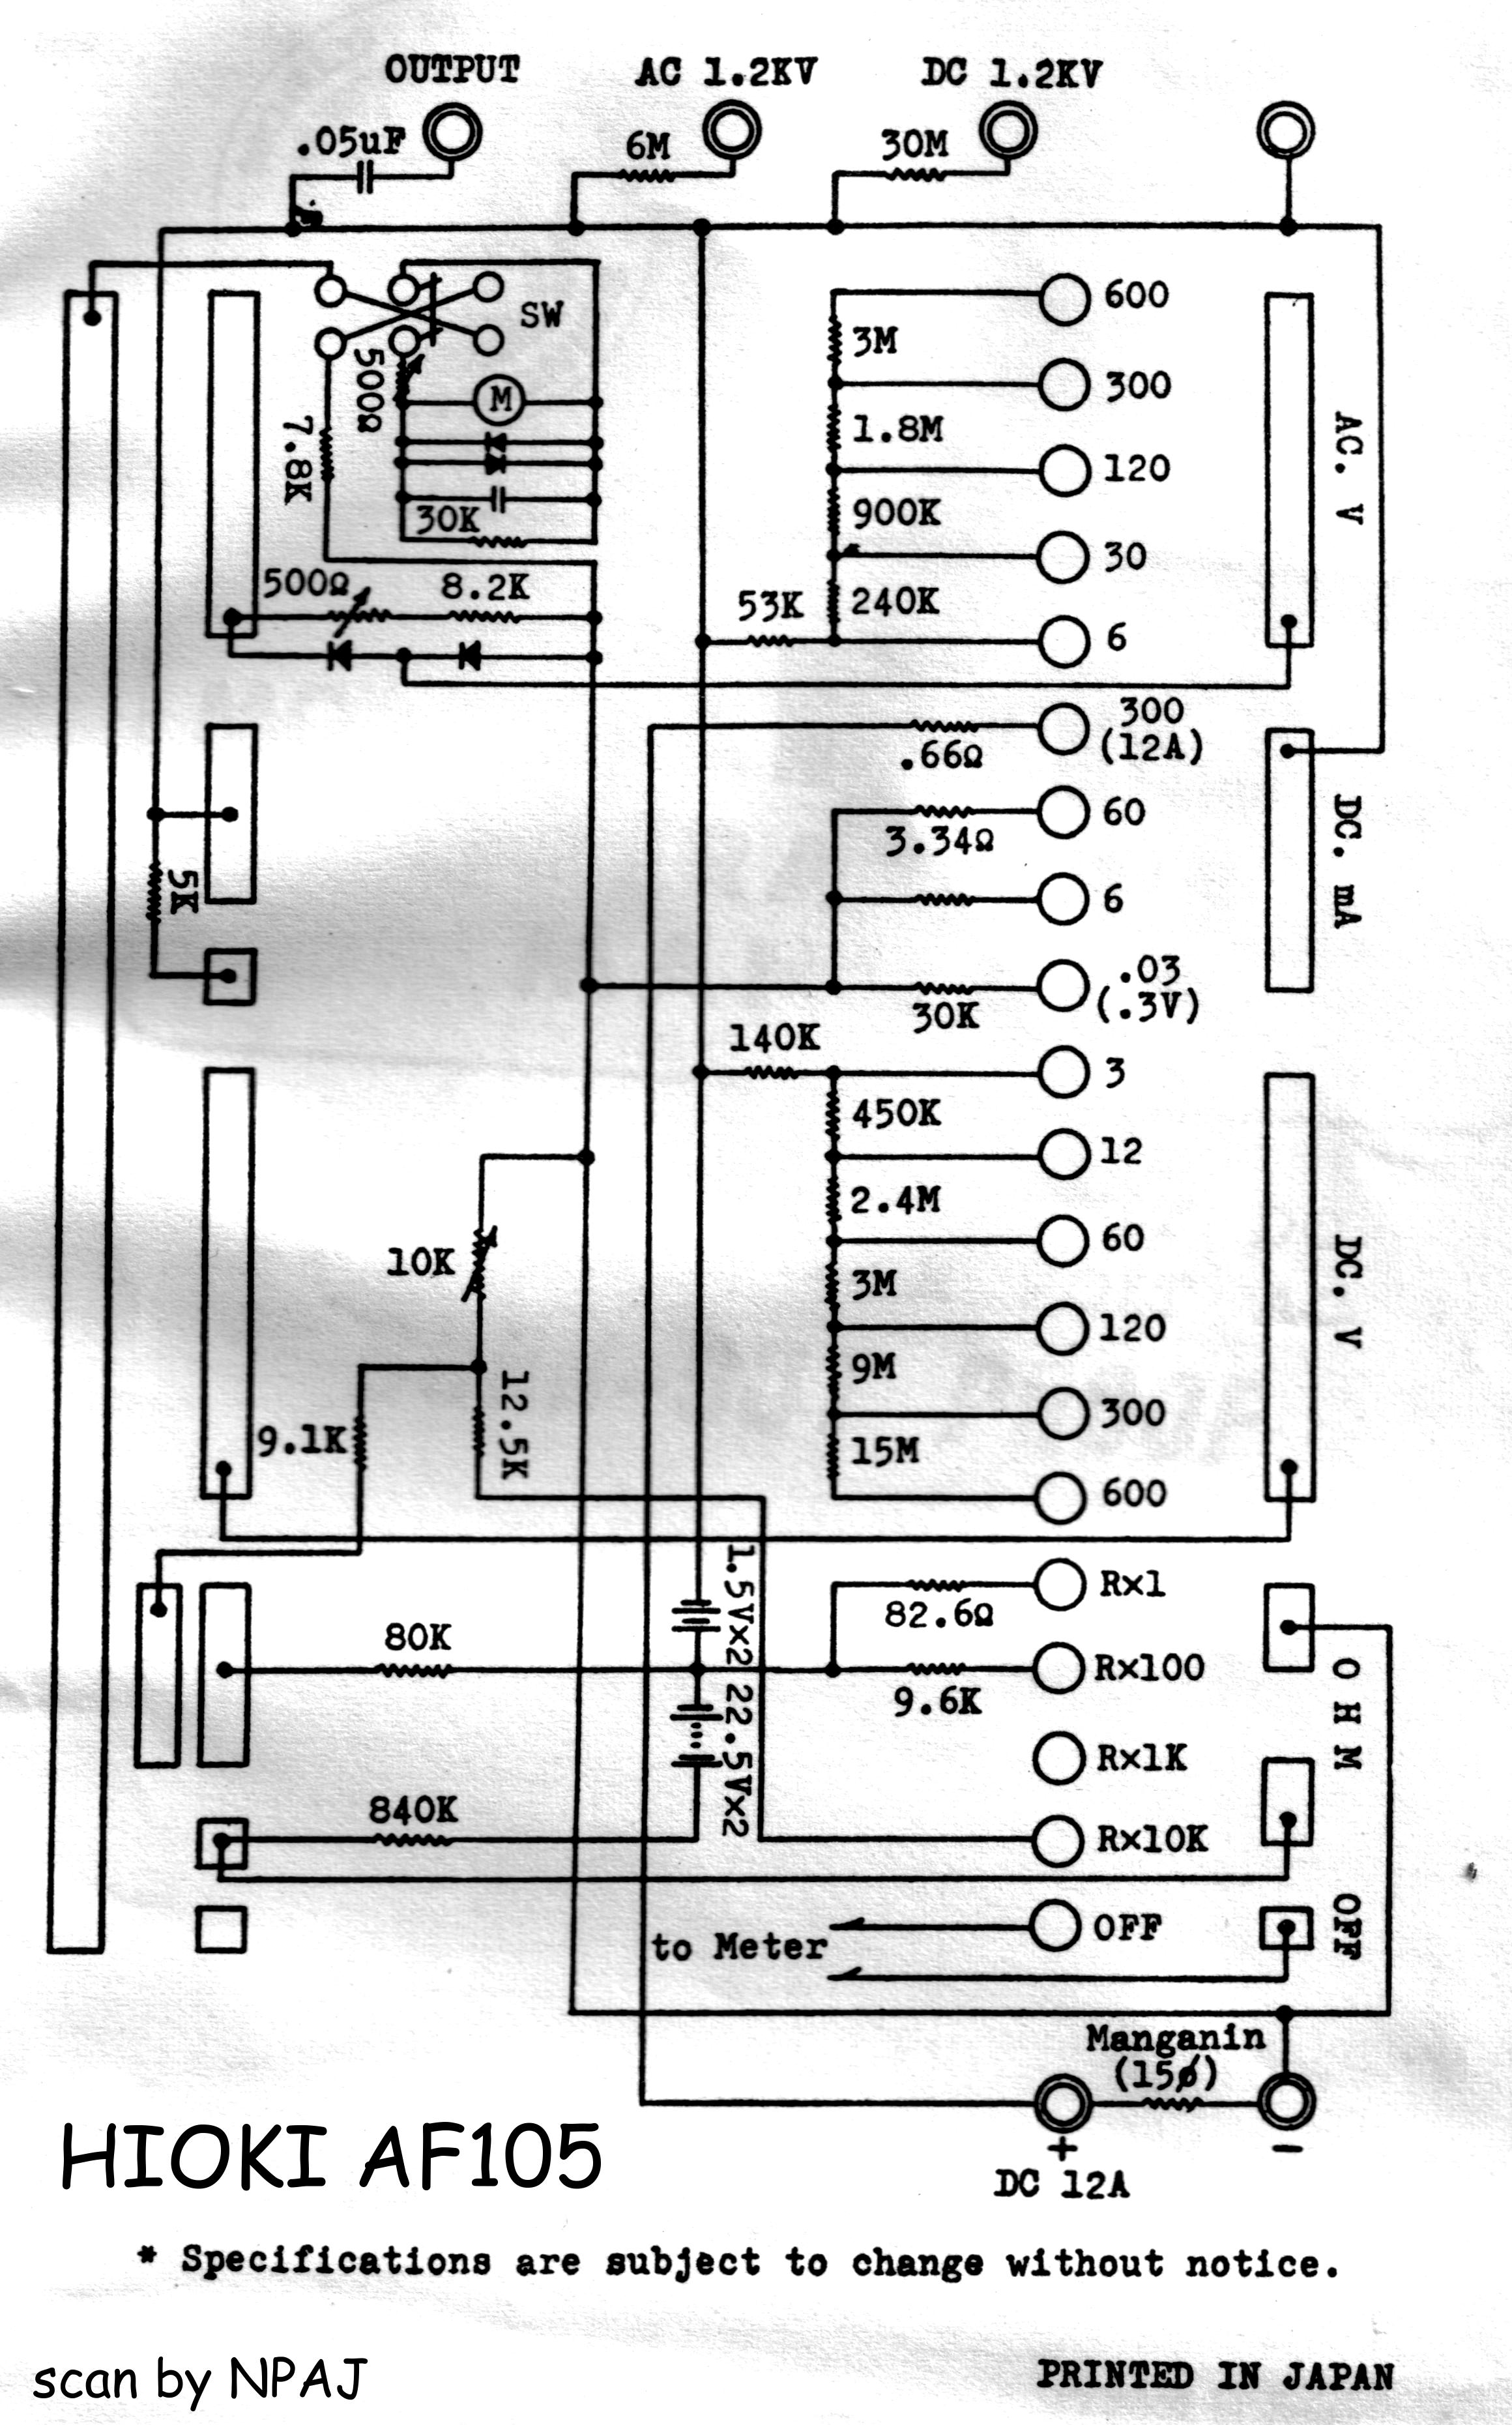 HIOKI AF105 Schematic diagram of Hioki model AF105.